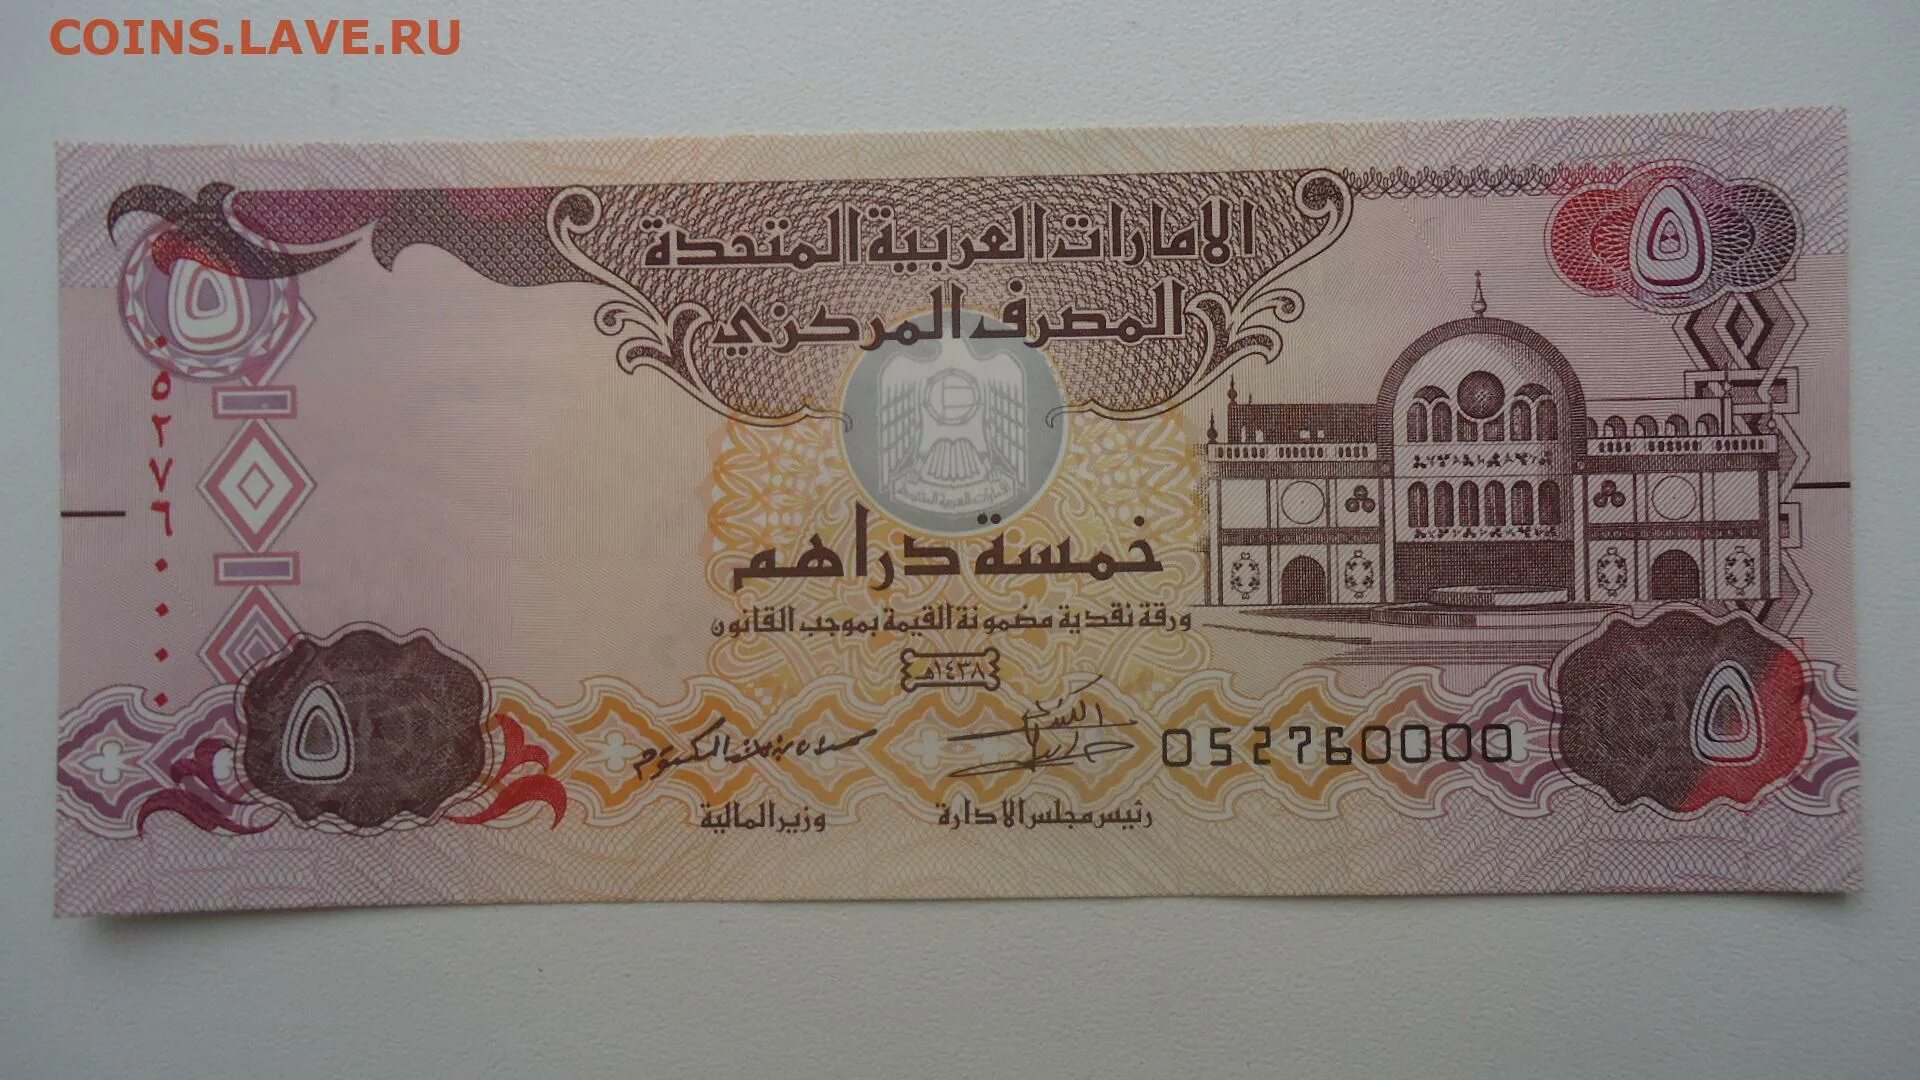 13000 дирхам. 5 Дирхам ОАЭ. Банкнота ОАЭ 10 дирхам. 25 Дирхам Объединенные арабские эмираты. Дирхам ОАЭ К доллару США.